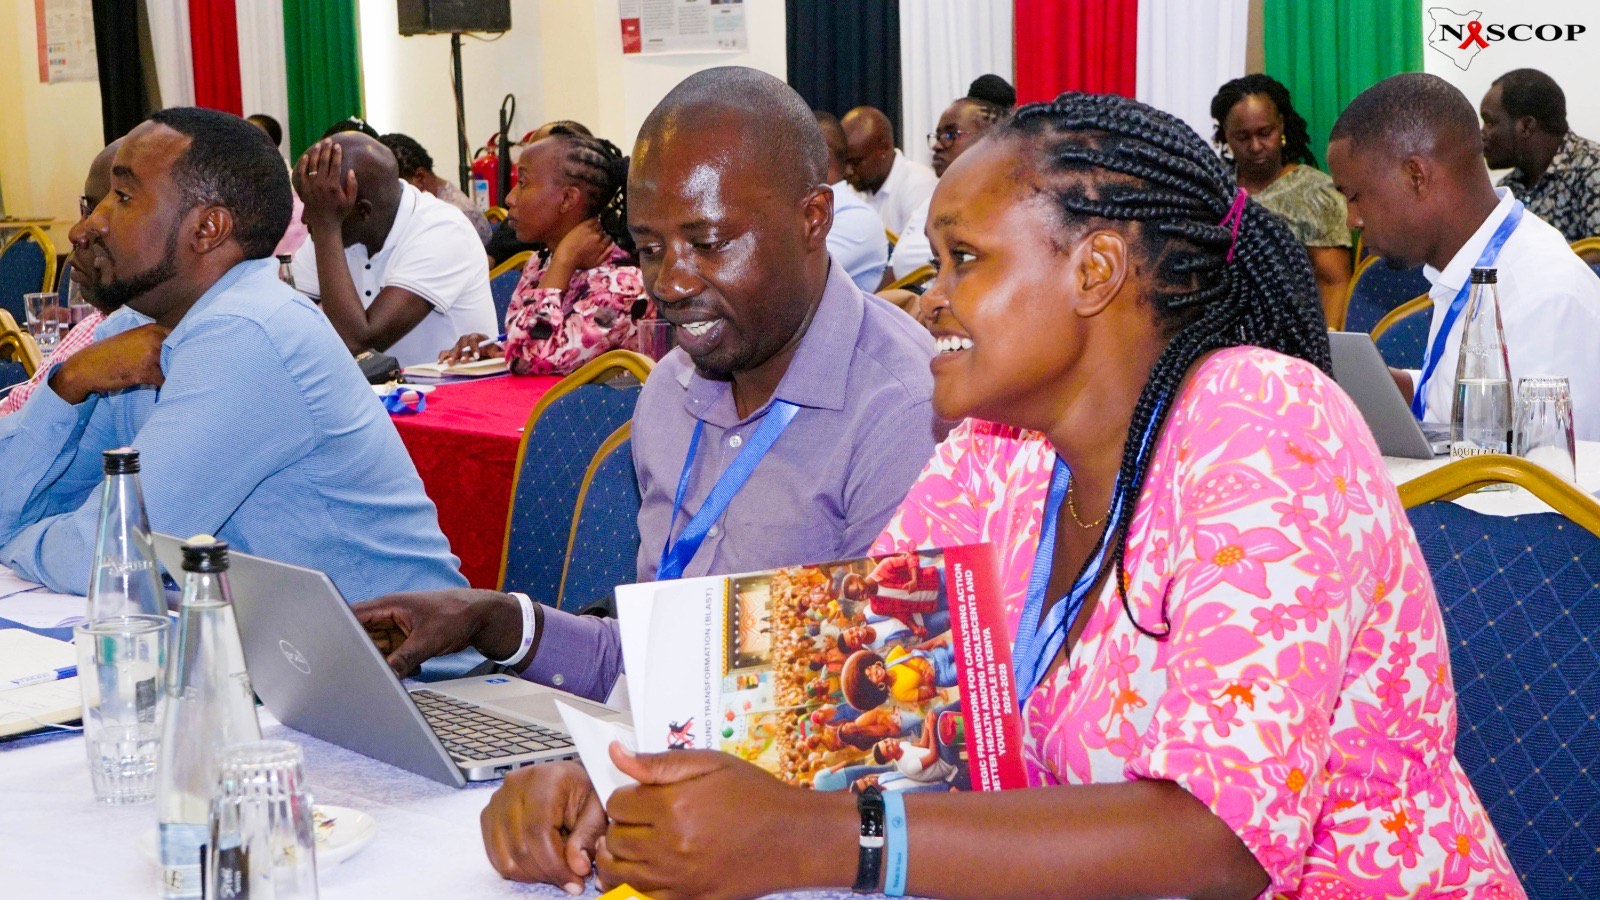 Kenya's Path to Universal Health Coverage Enhance by Digital Health Innovations